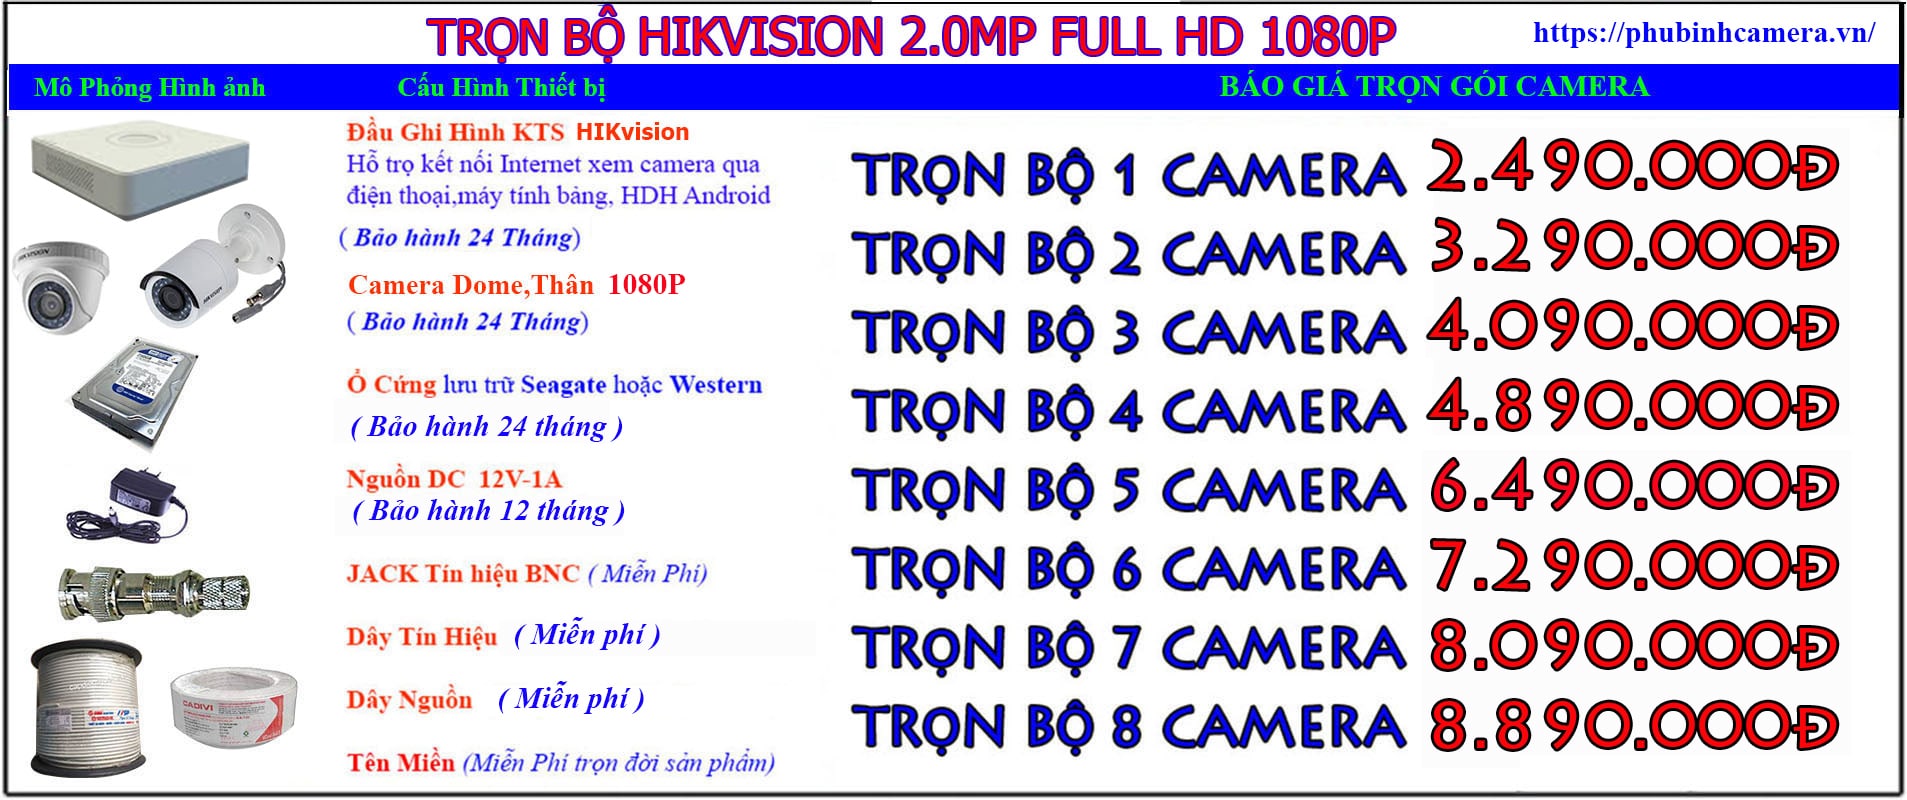 lắp đặt camera trọn bộ hikvision 2.0-1080P